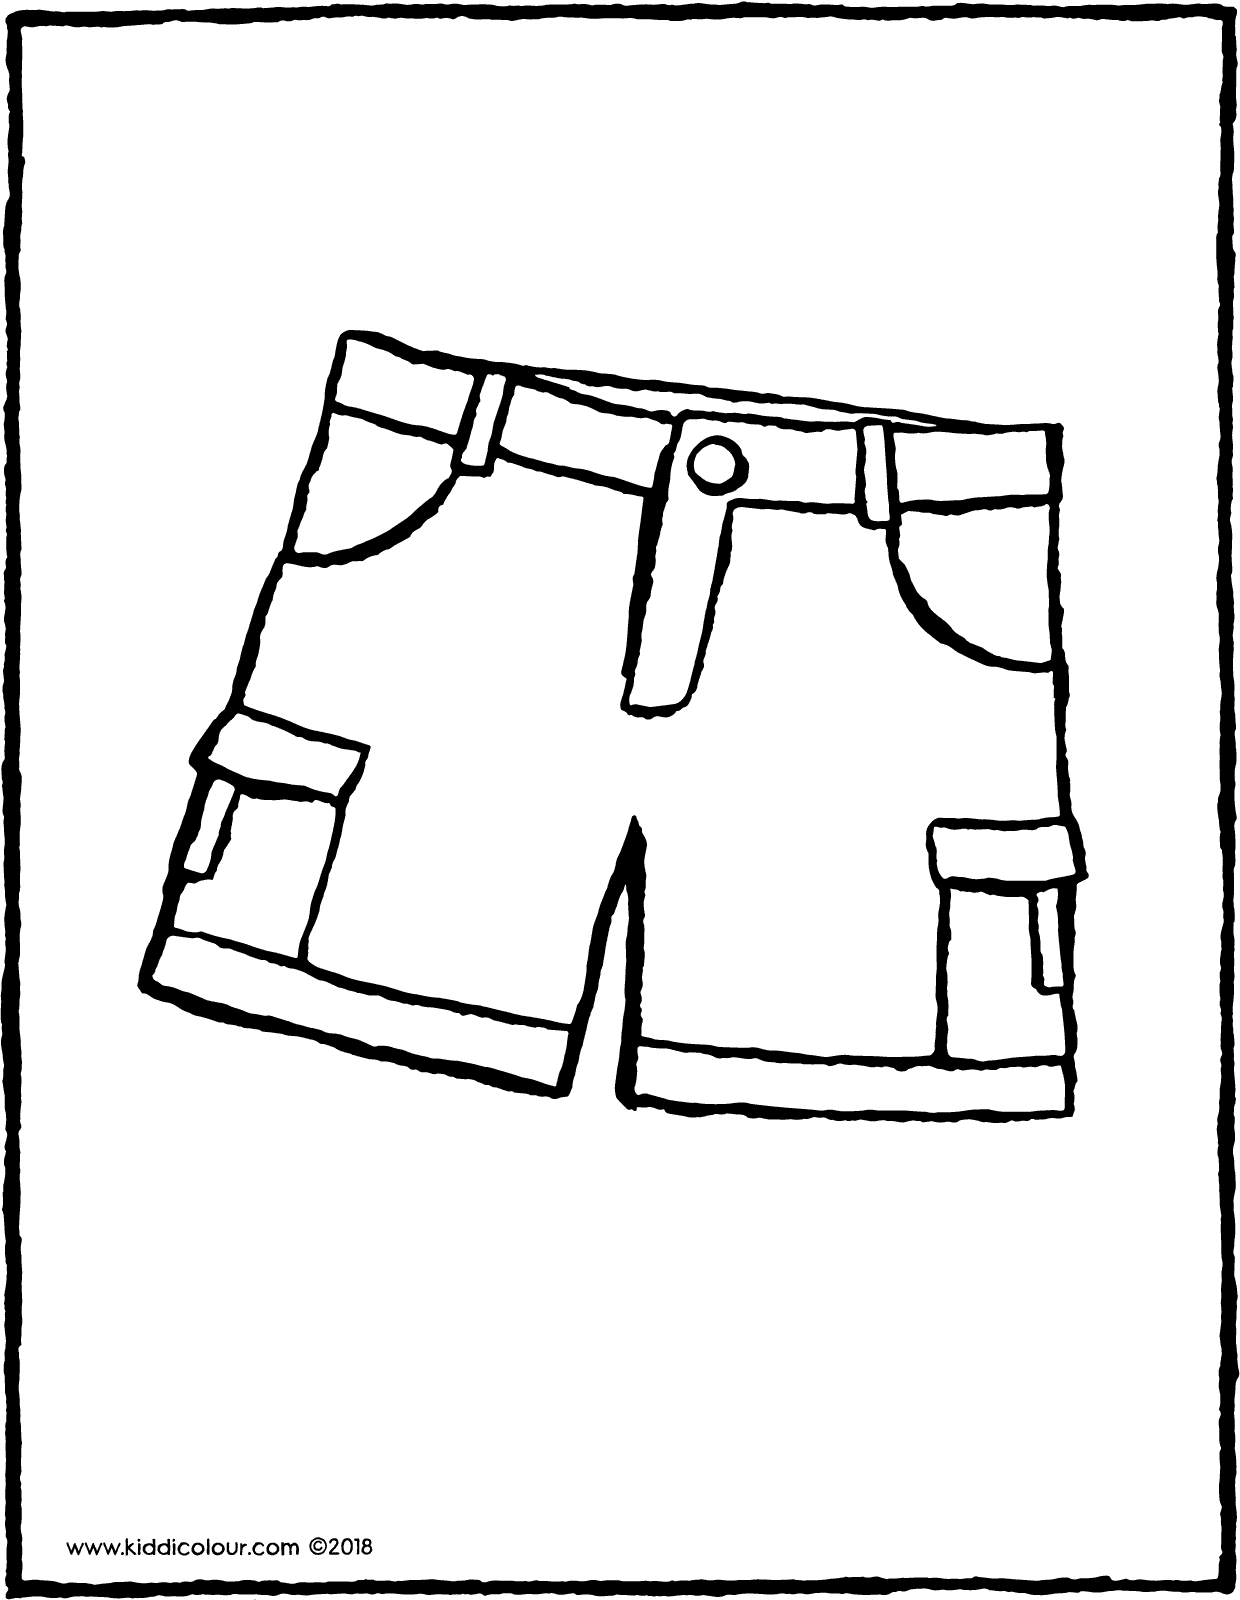 shorts - kiddicolour